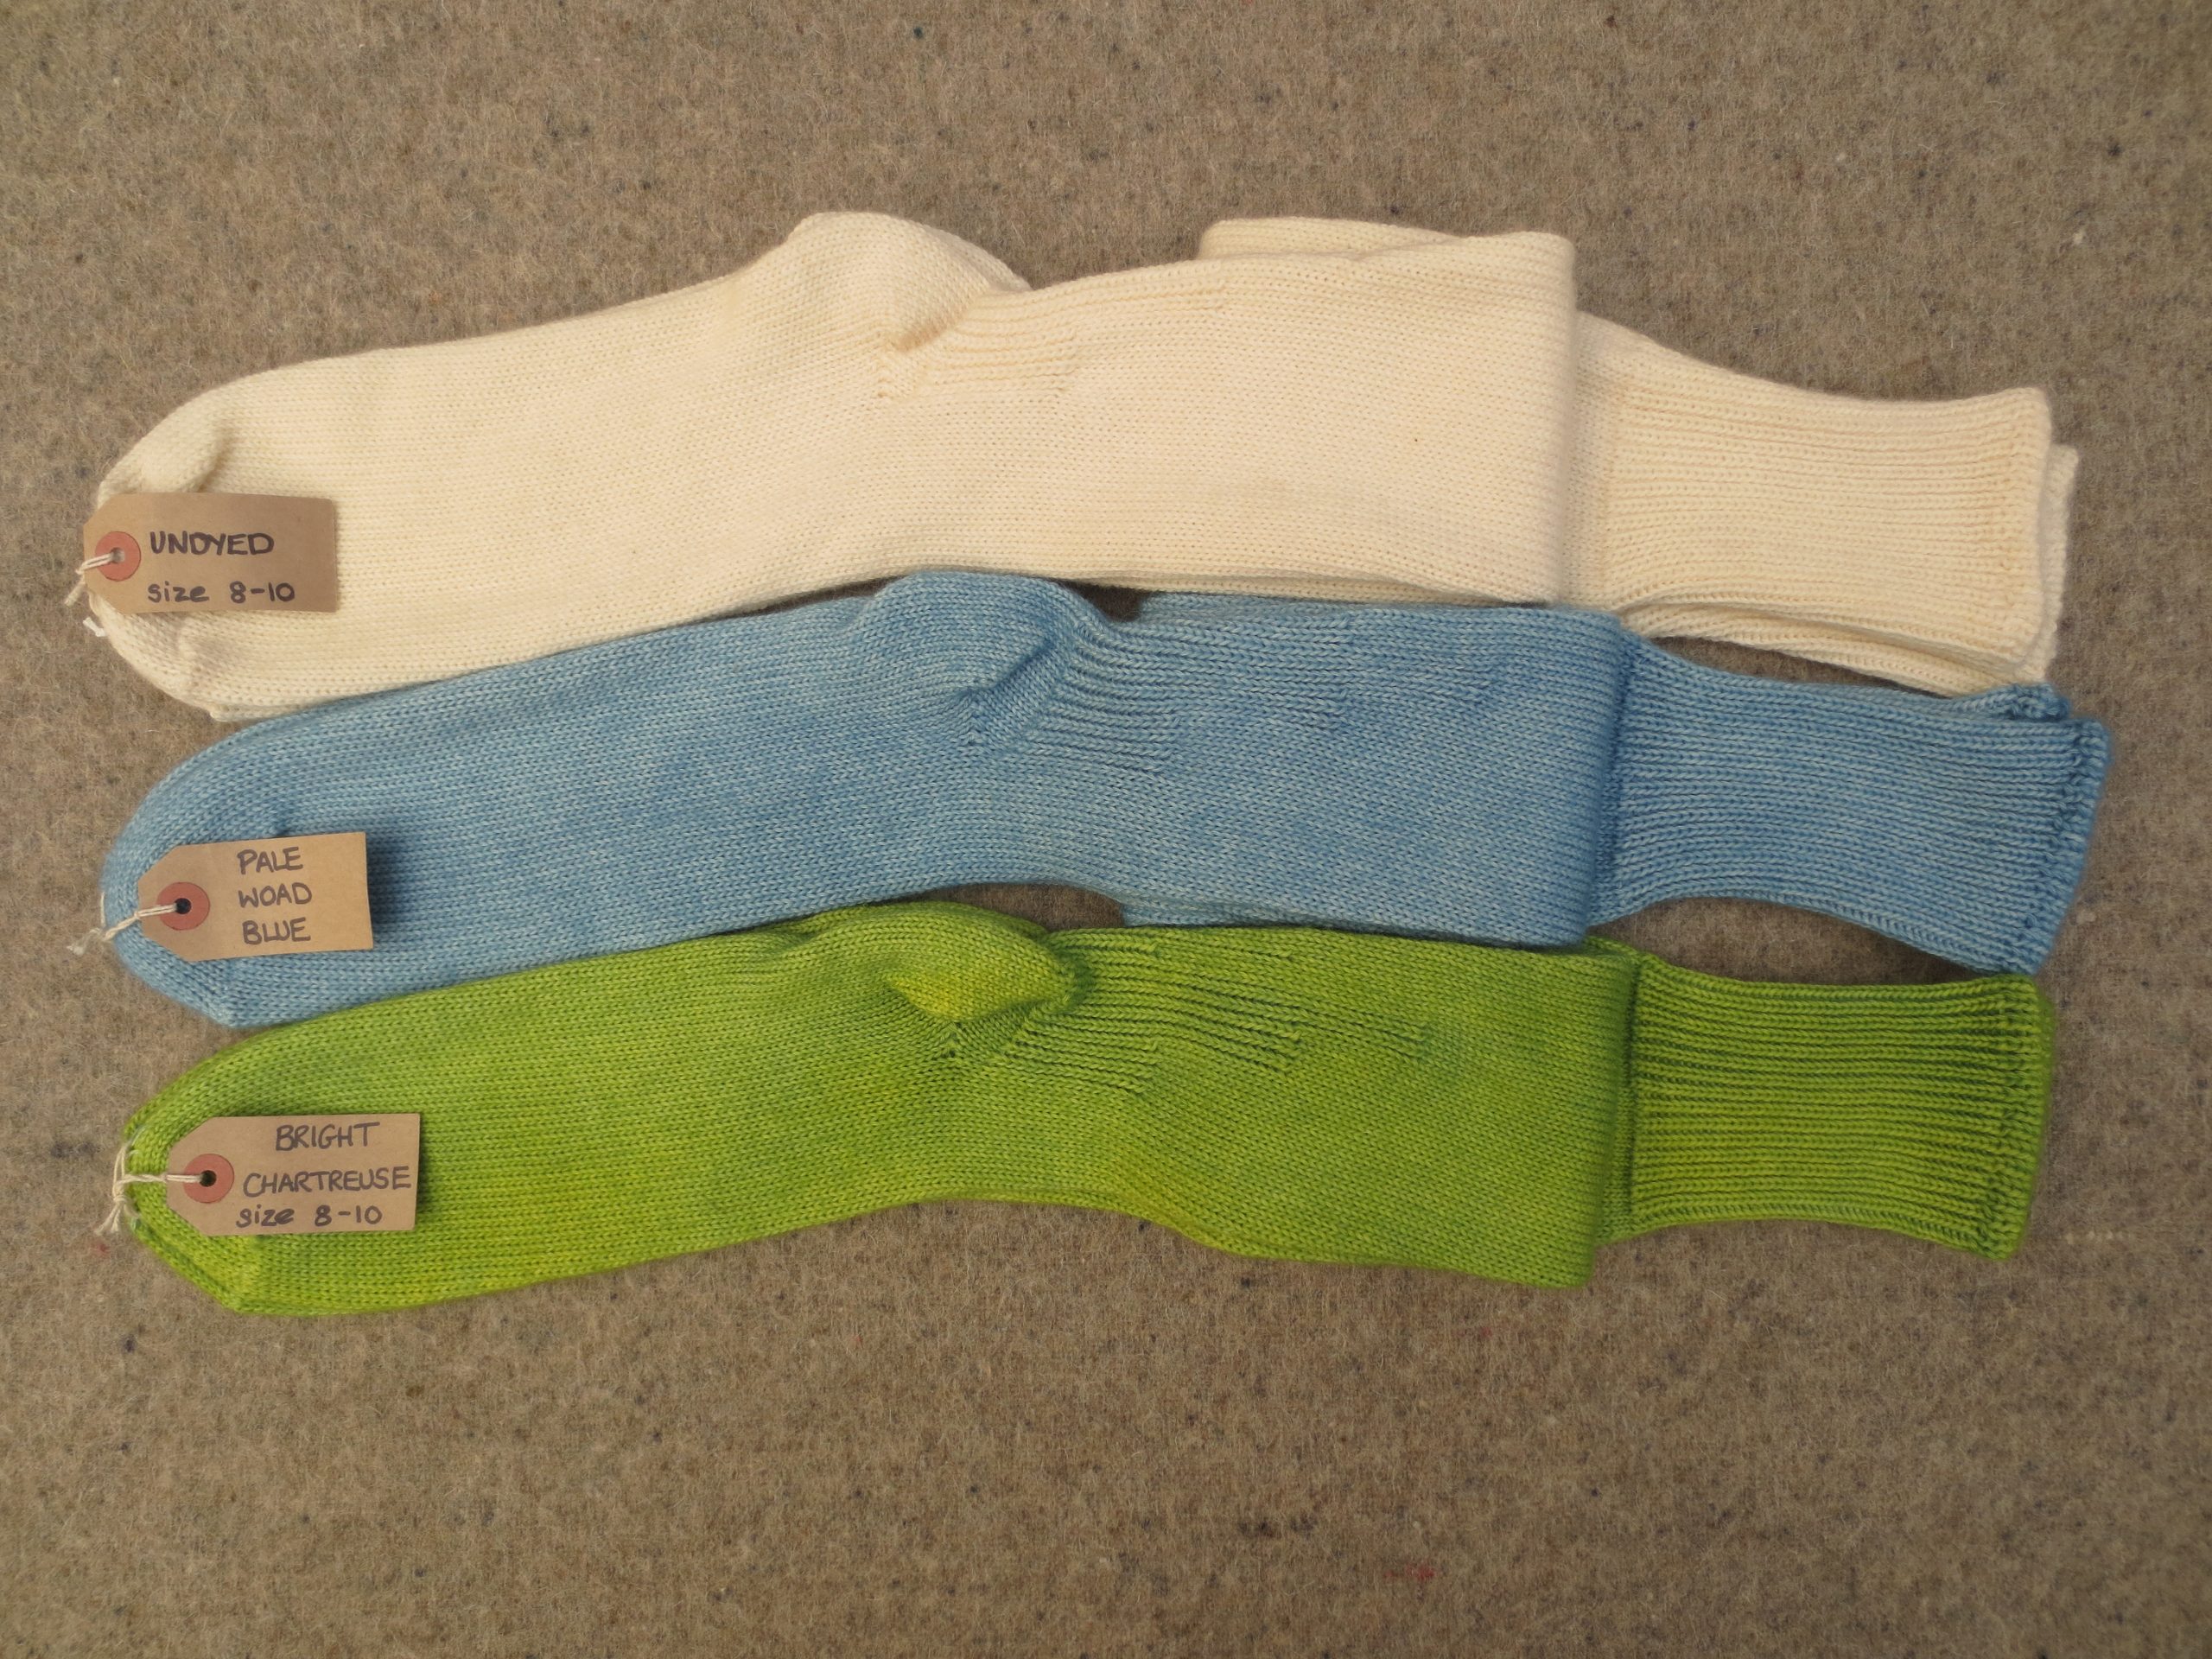 Size 11-13 Stanbury Walkers, British wool walking socks – naturally dyed